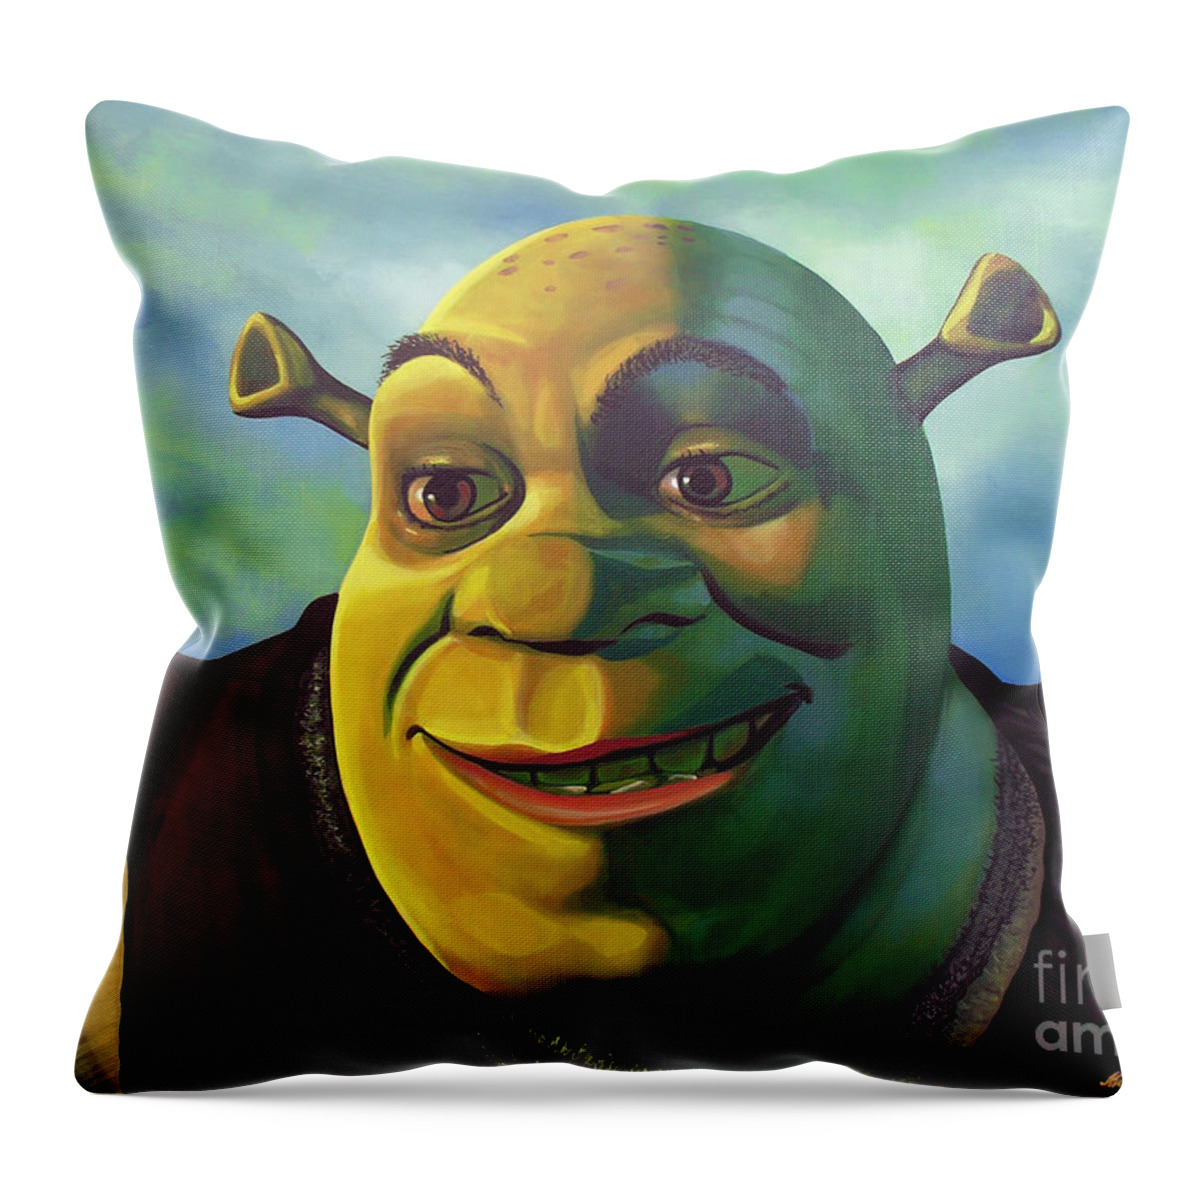 Shrek Throw Pillow featuring the painting Shrek by Paul Meijering